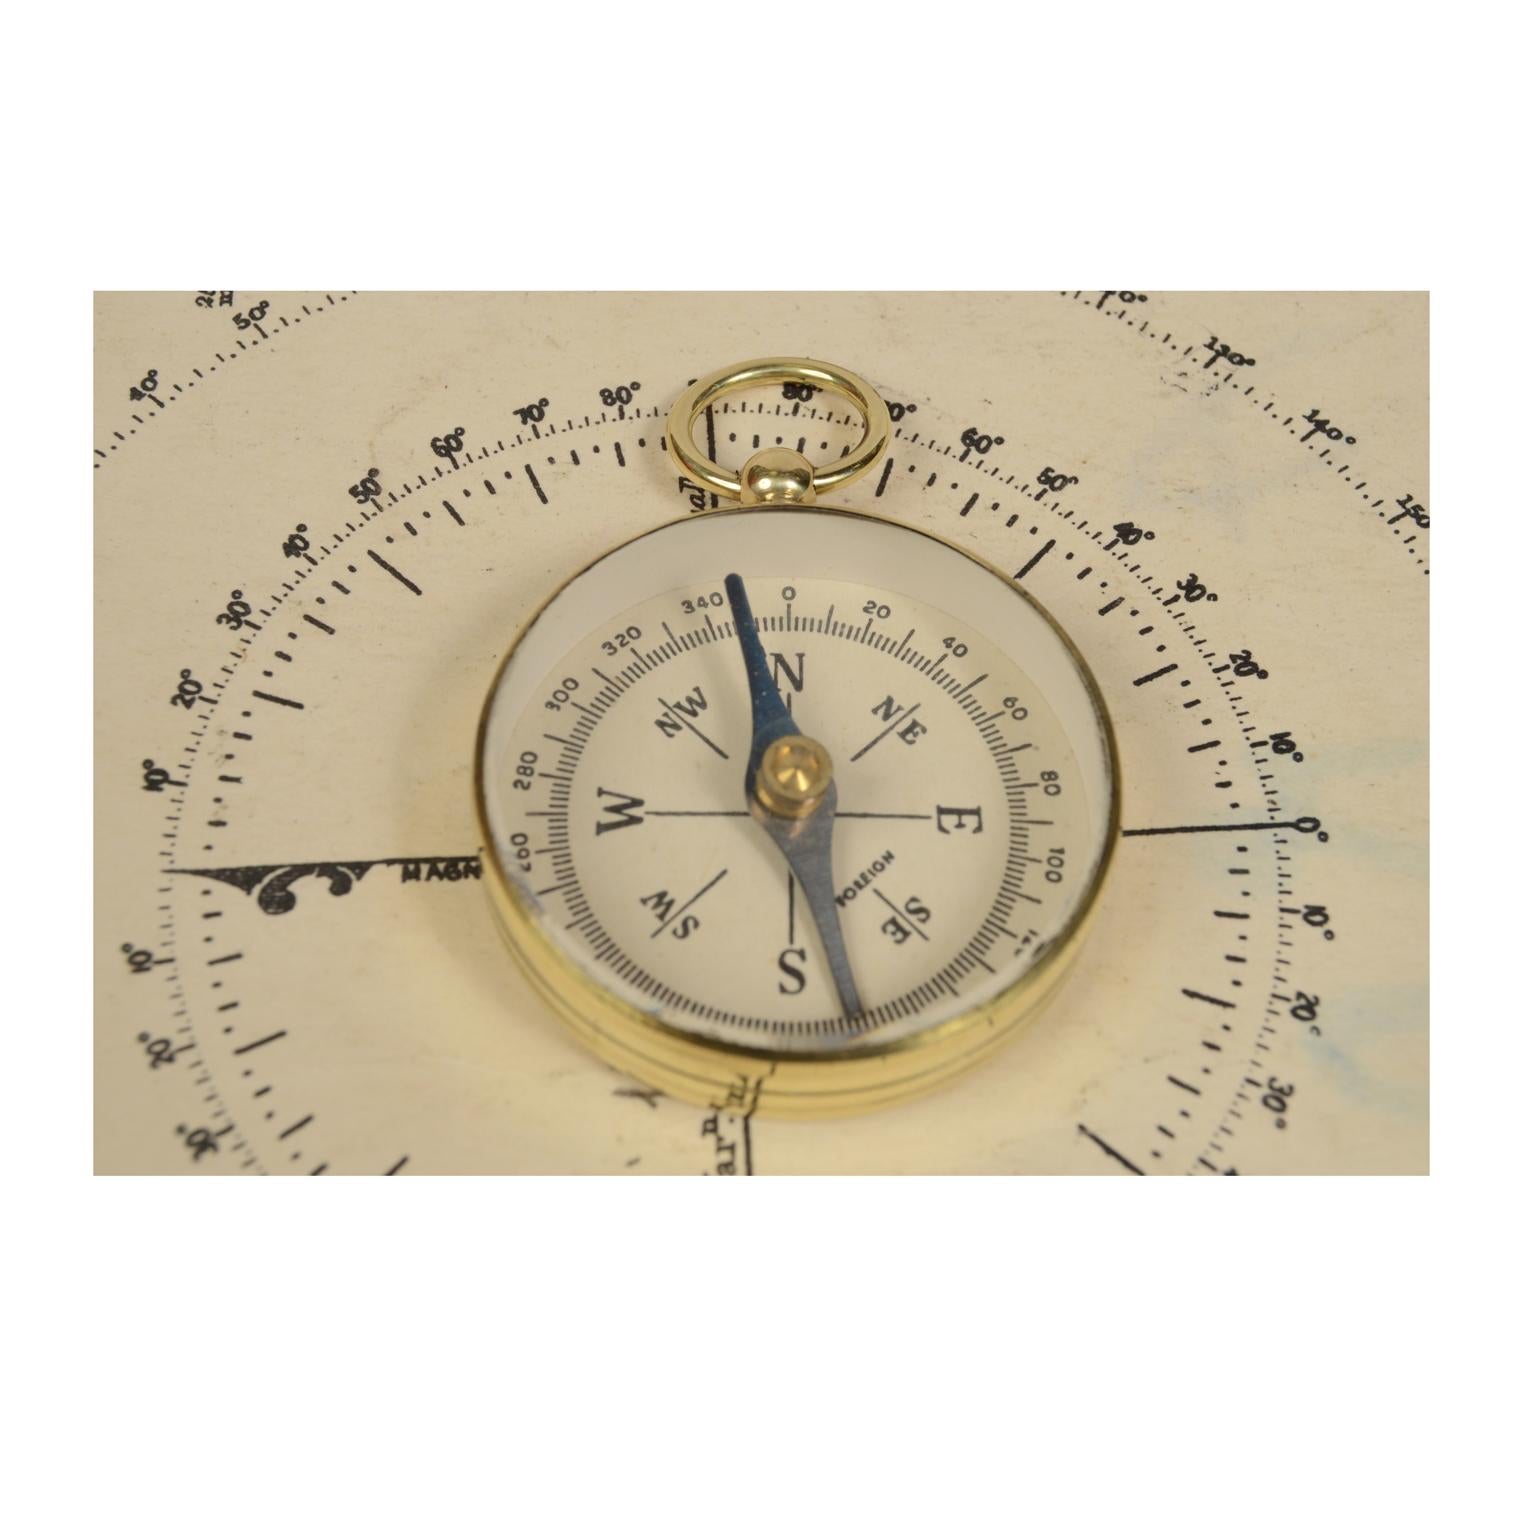 British 1930s Made in UK Small Brass Pocket Compass Antique Scientific instrument